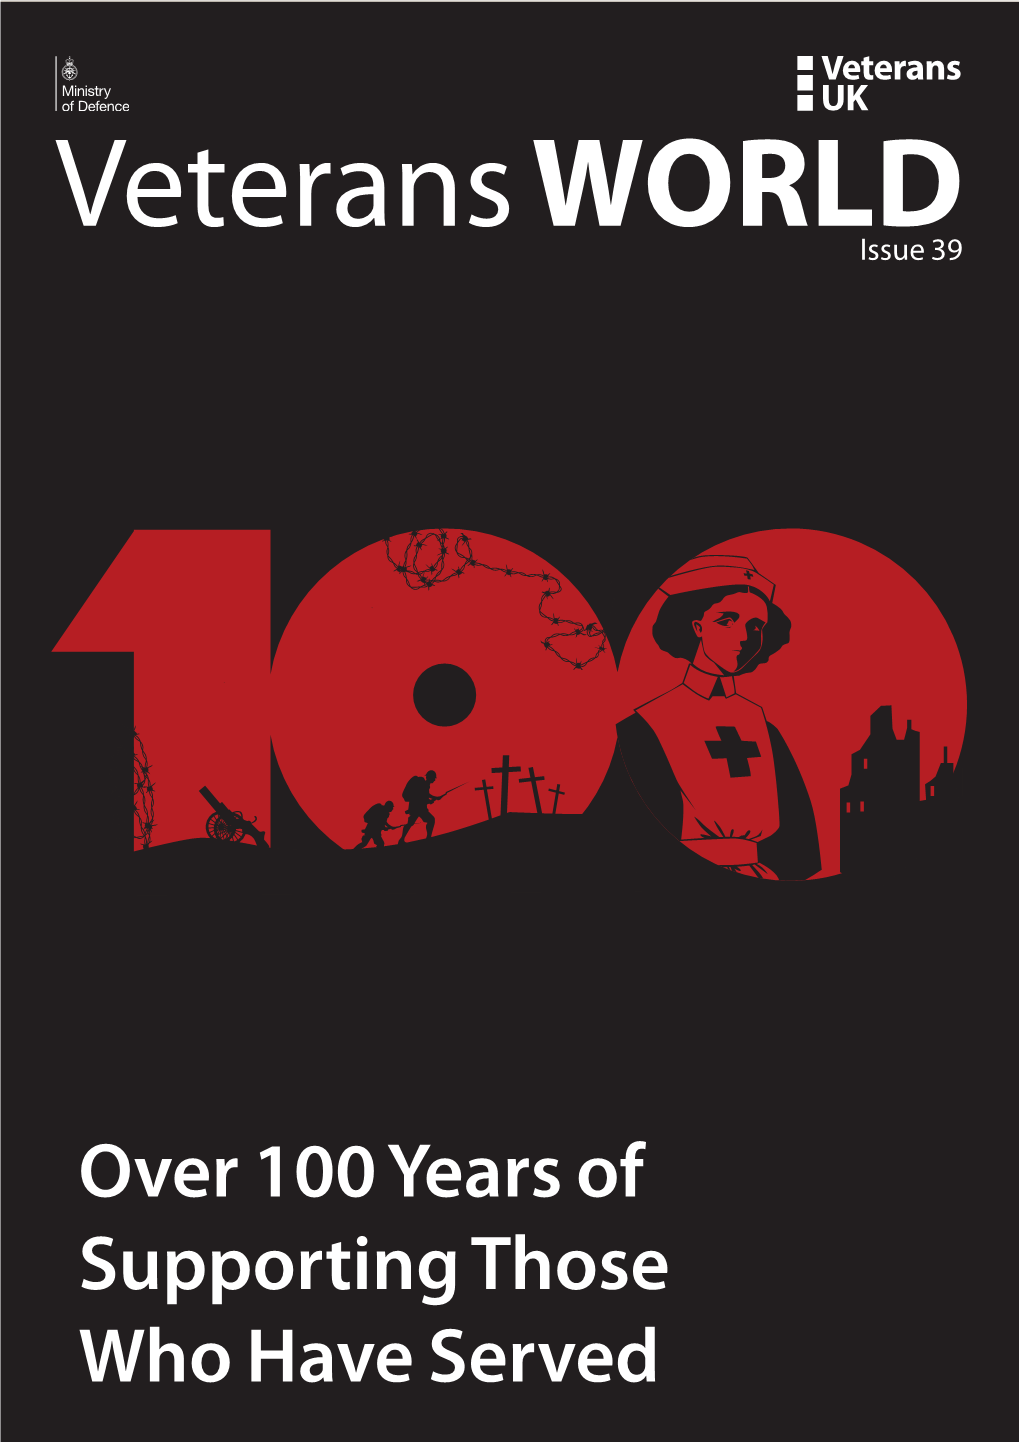 Veterans WORLD Issue 39